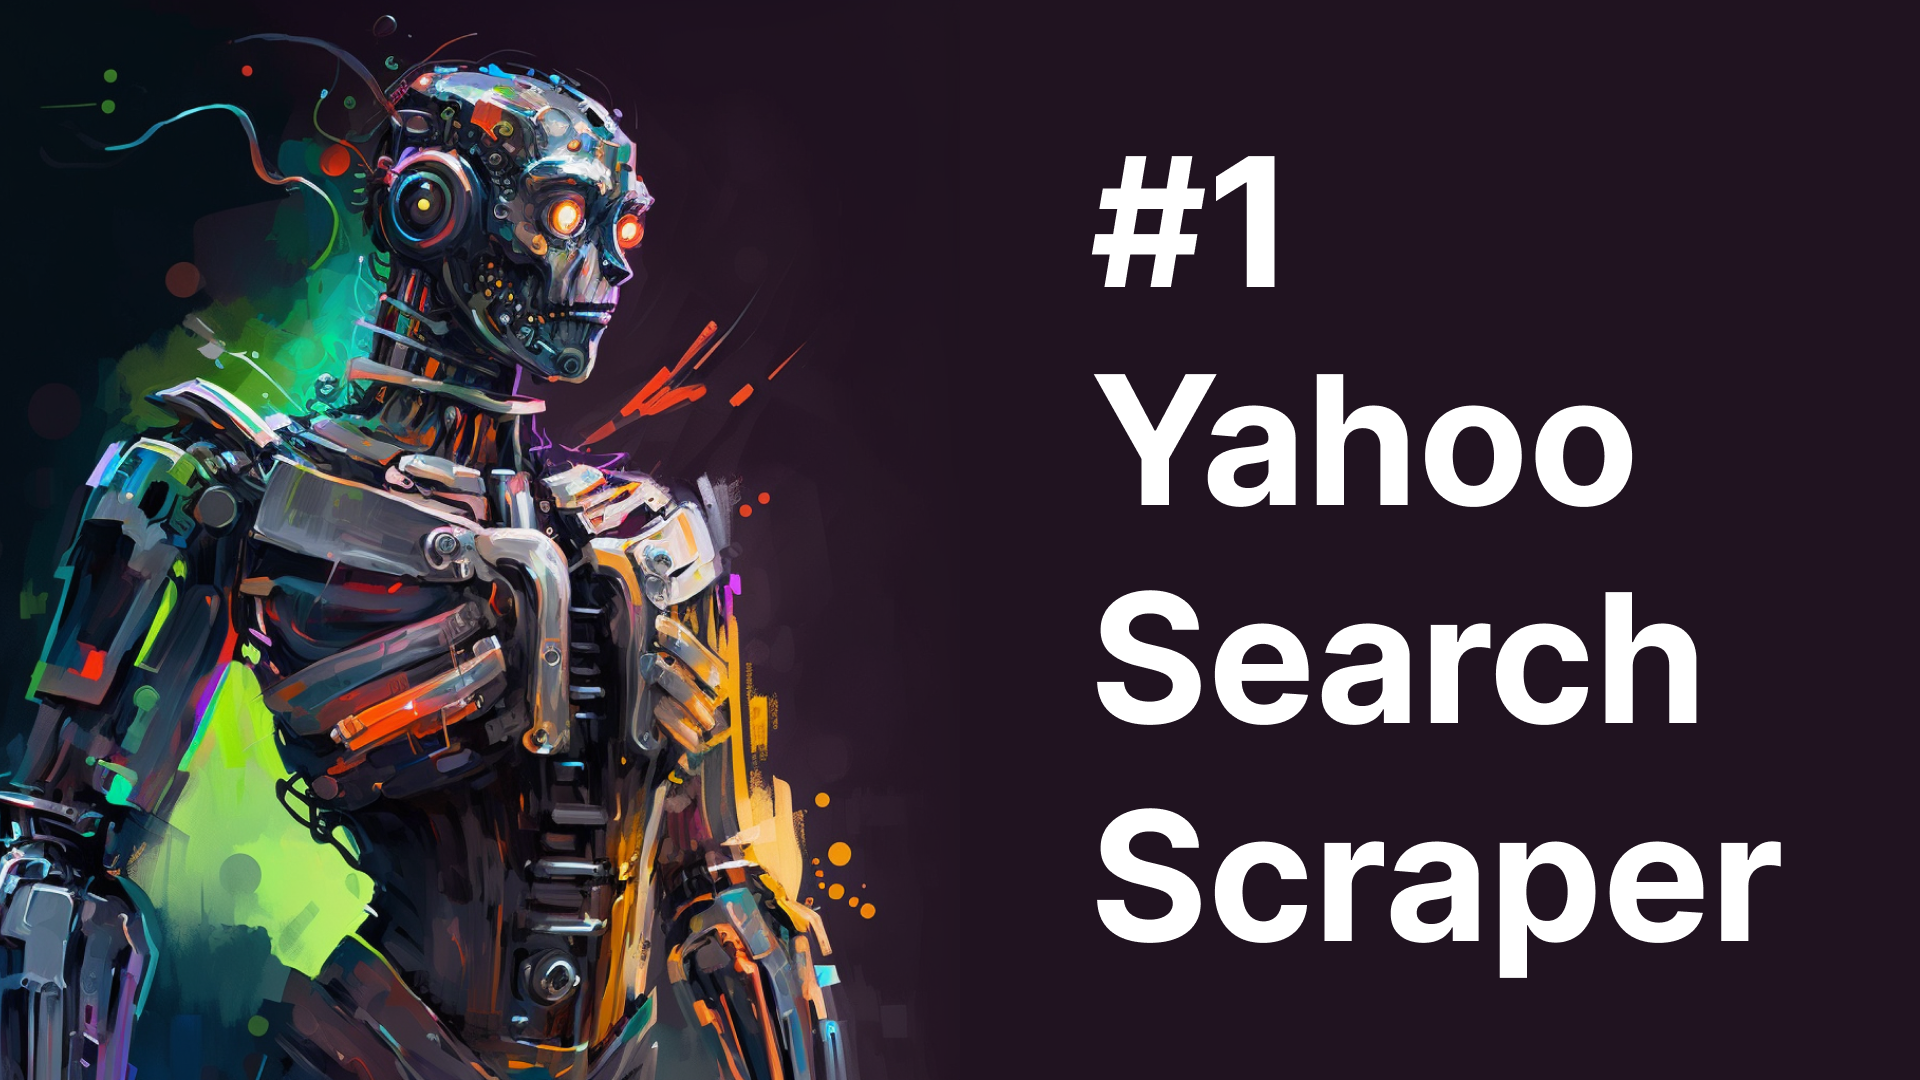 Yahoo Search Scraper Featured Image